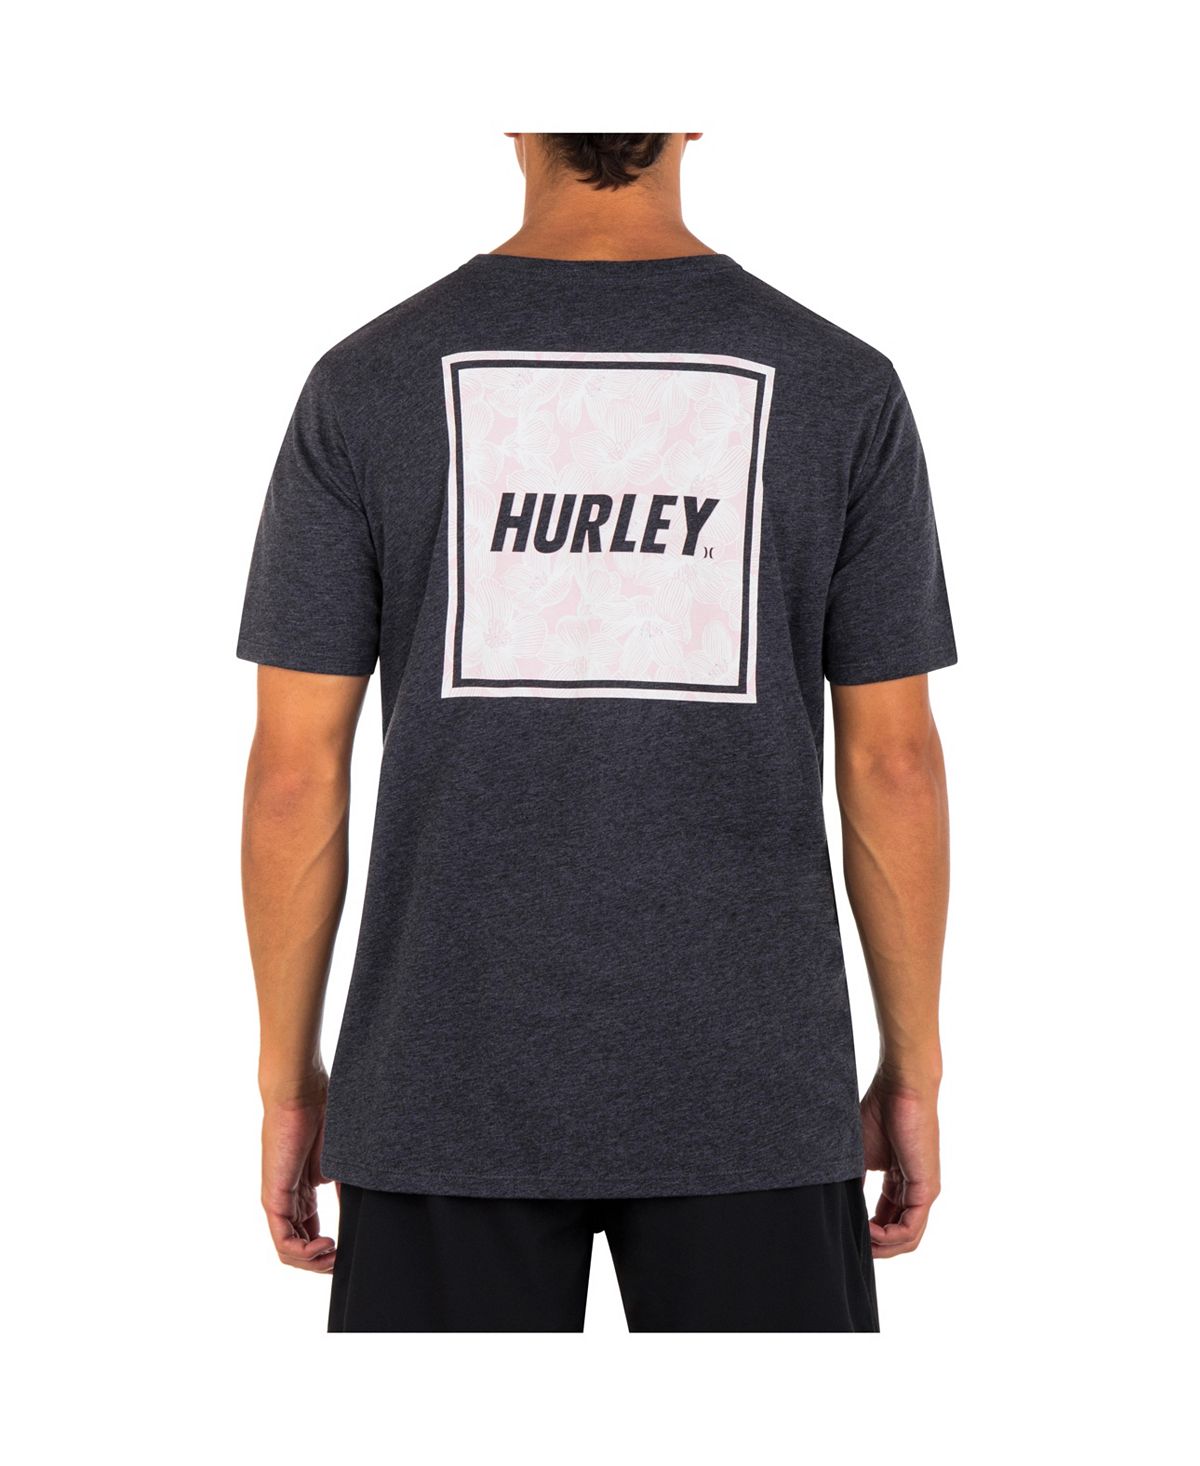 Мужская повседневная футболка с коротким рукавом Four Corners Hurley футболка hurley four corners short sleeve tee цвет charcoal fern